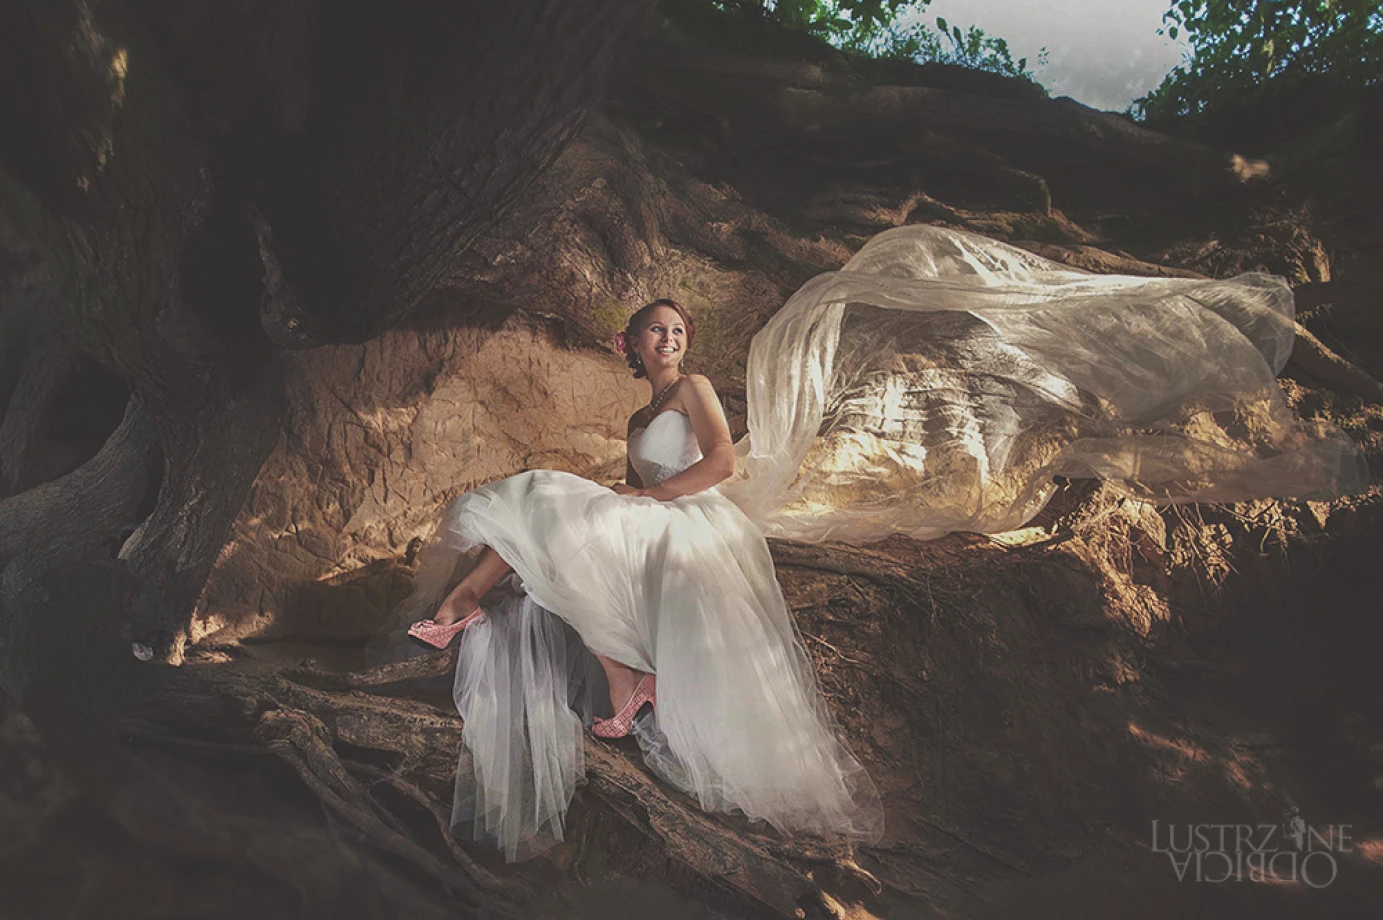 fotograf warszawa lustrzaneodbicia portfolio zdjecia slubne inspiracje wesele plener slubny sesja slubna